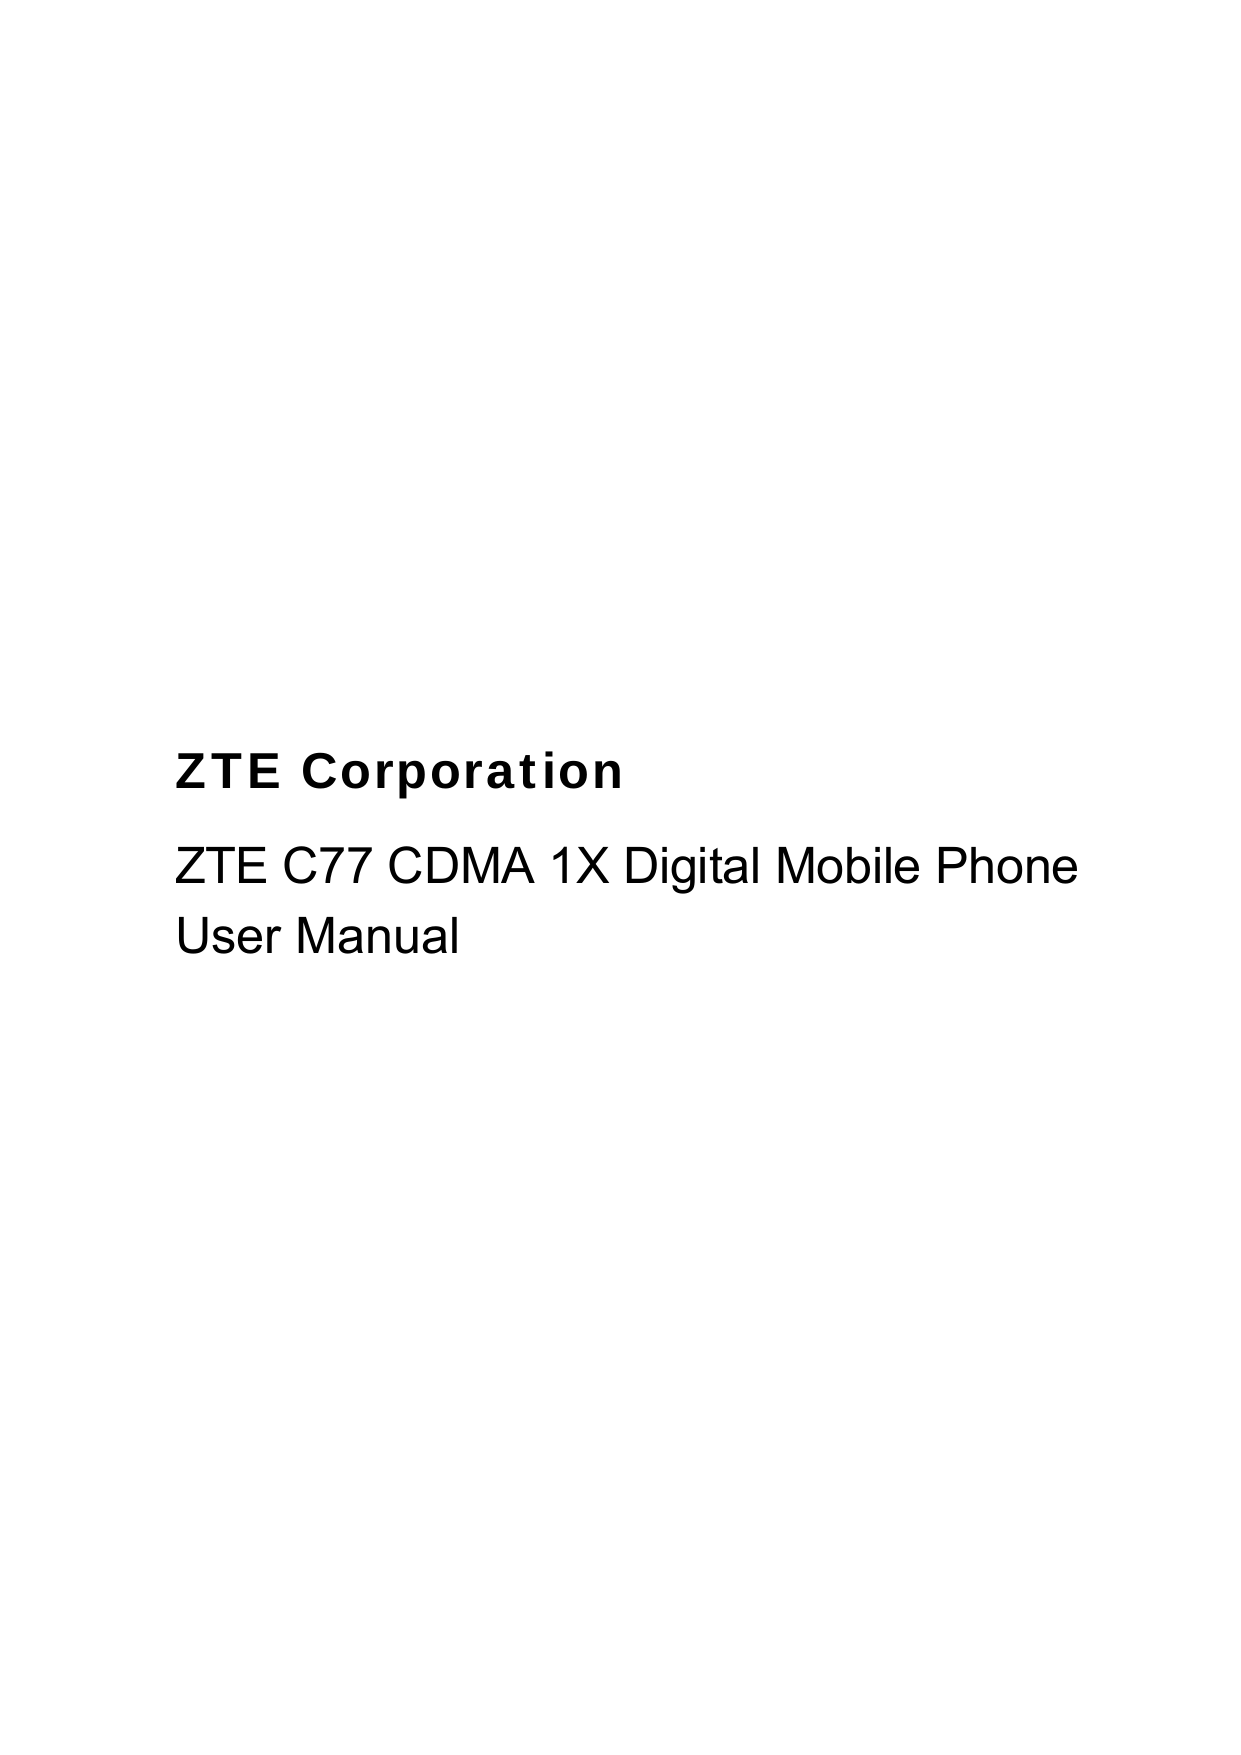   ZTE Corporation ZTE C77 CDMA 1X Digital Mobile Phone User Manual 